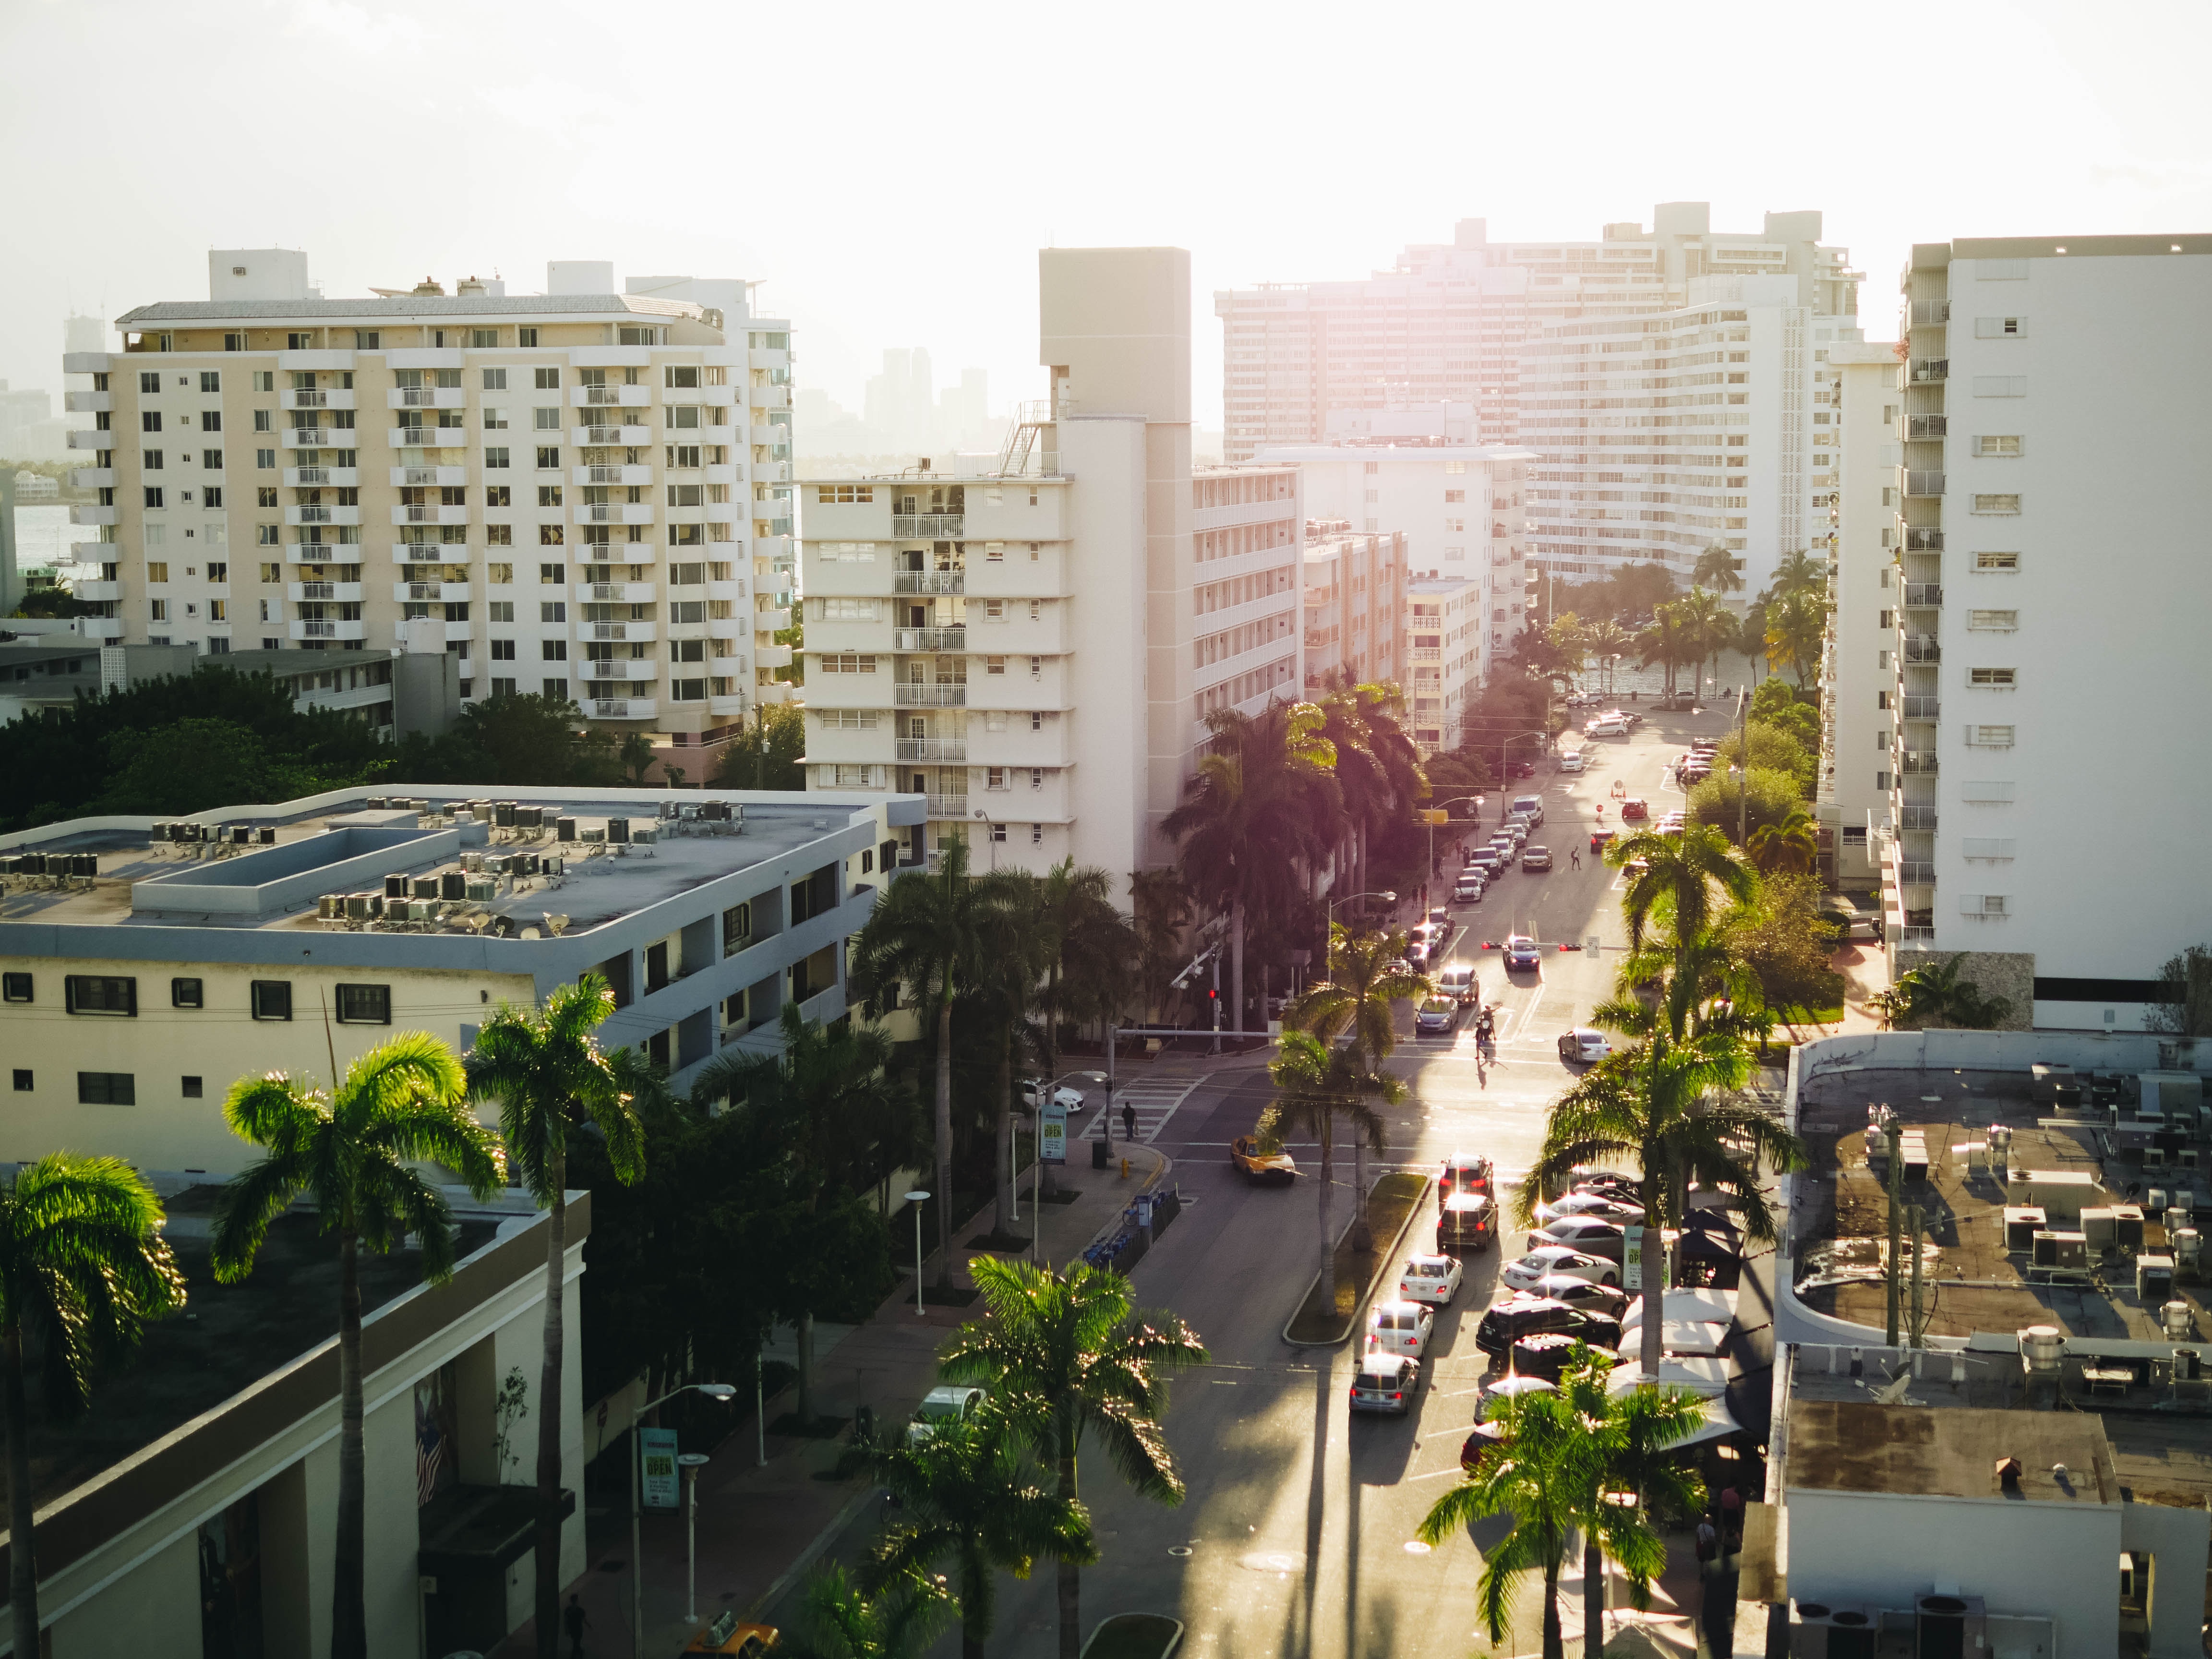 5 Neighborhoods To Visit On Your Next Trip To Miami